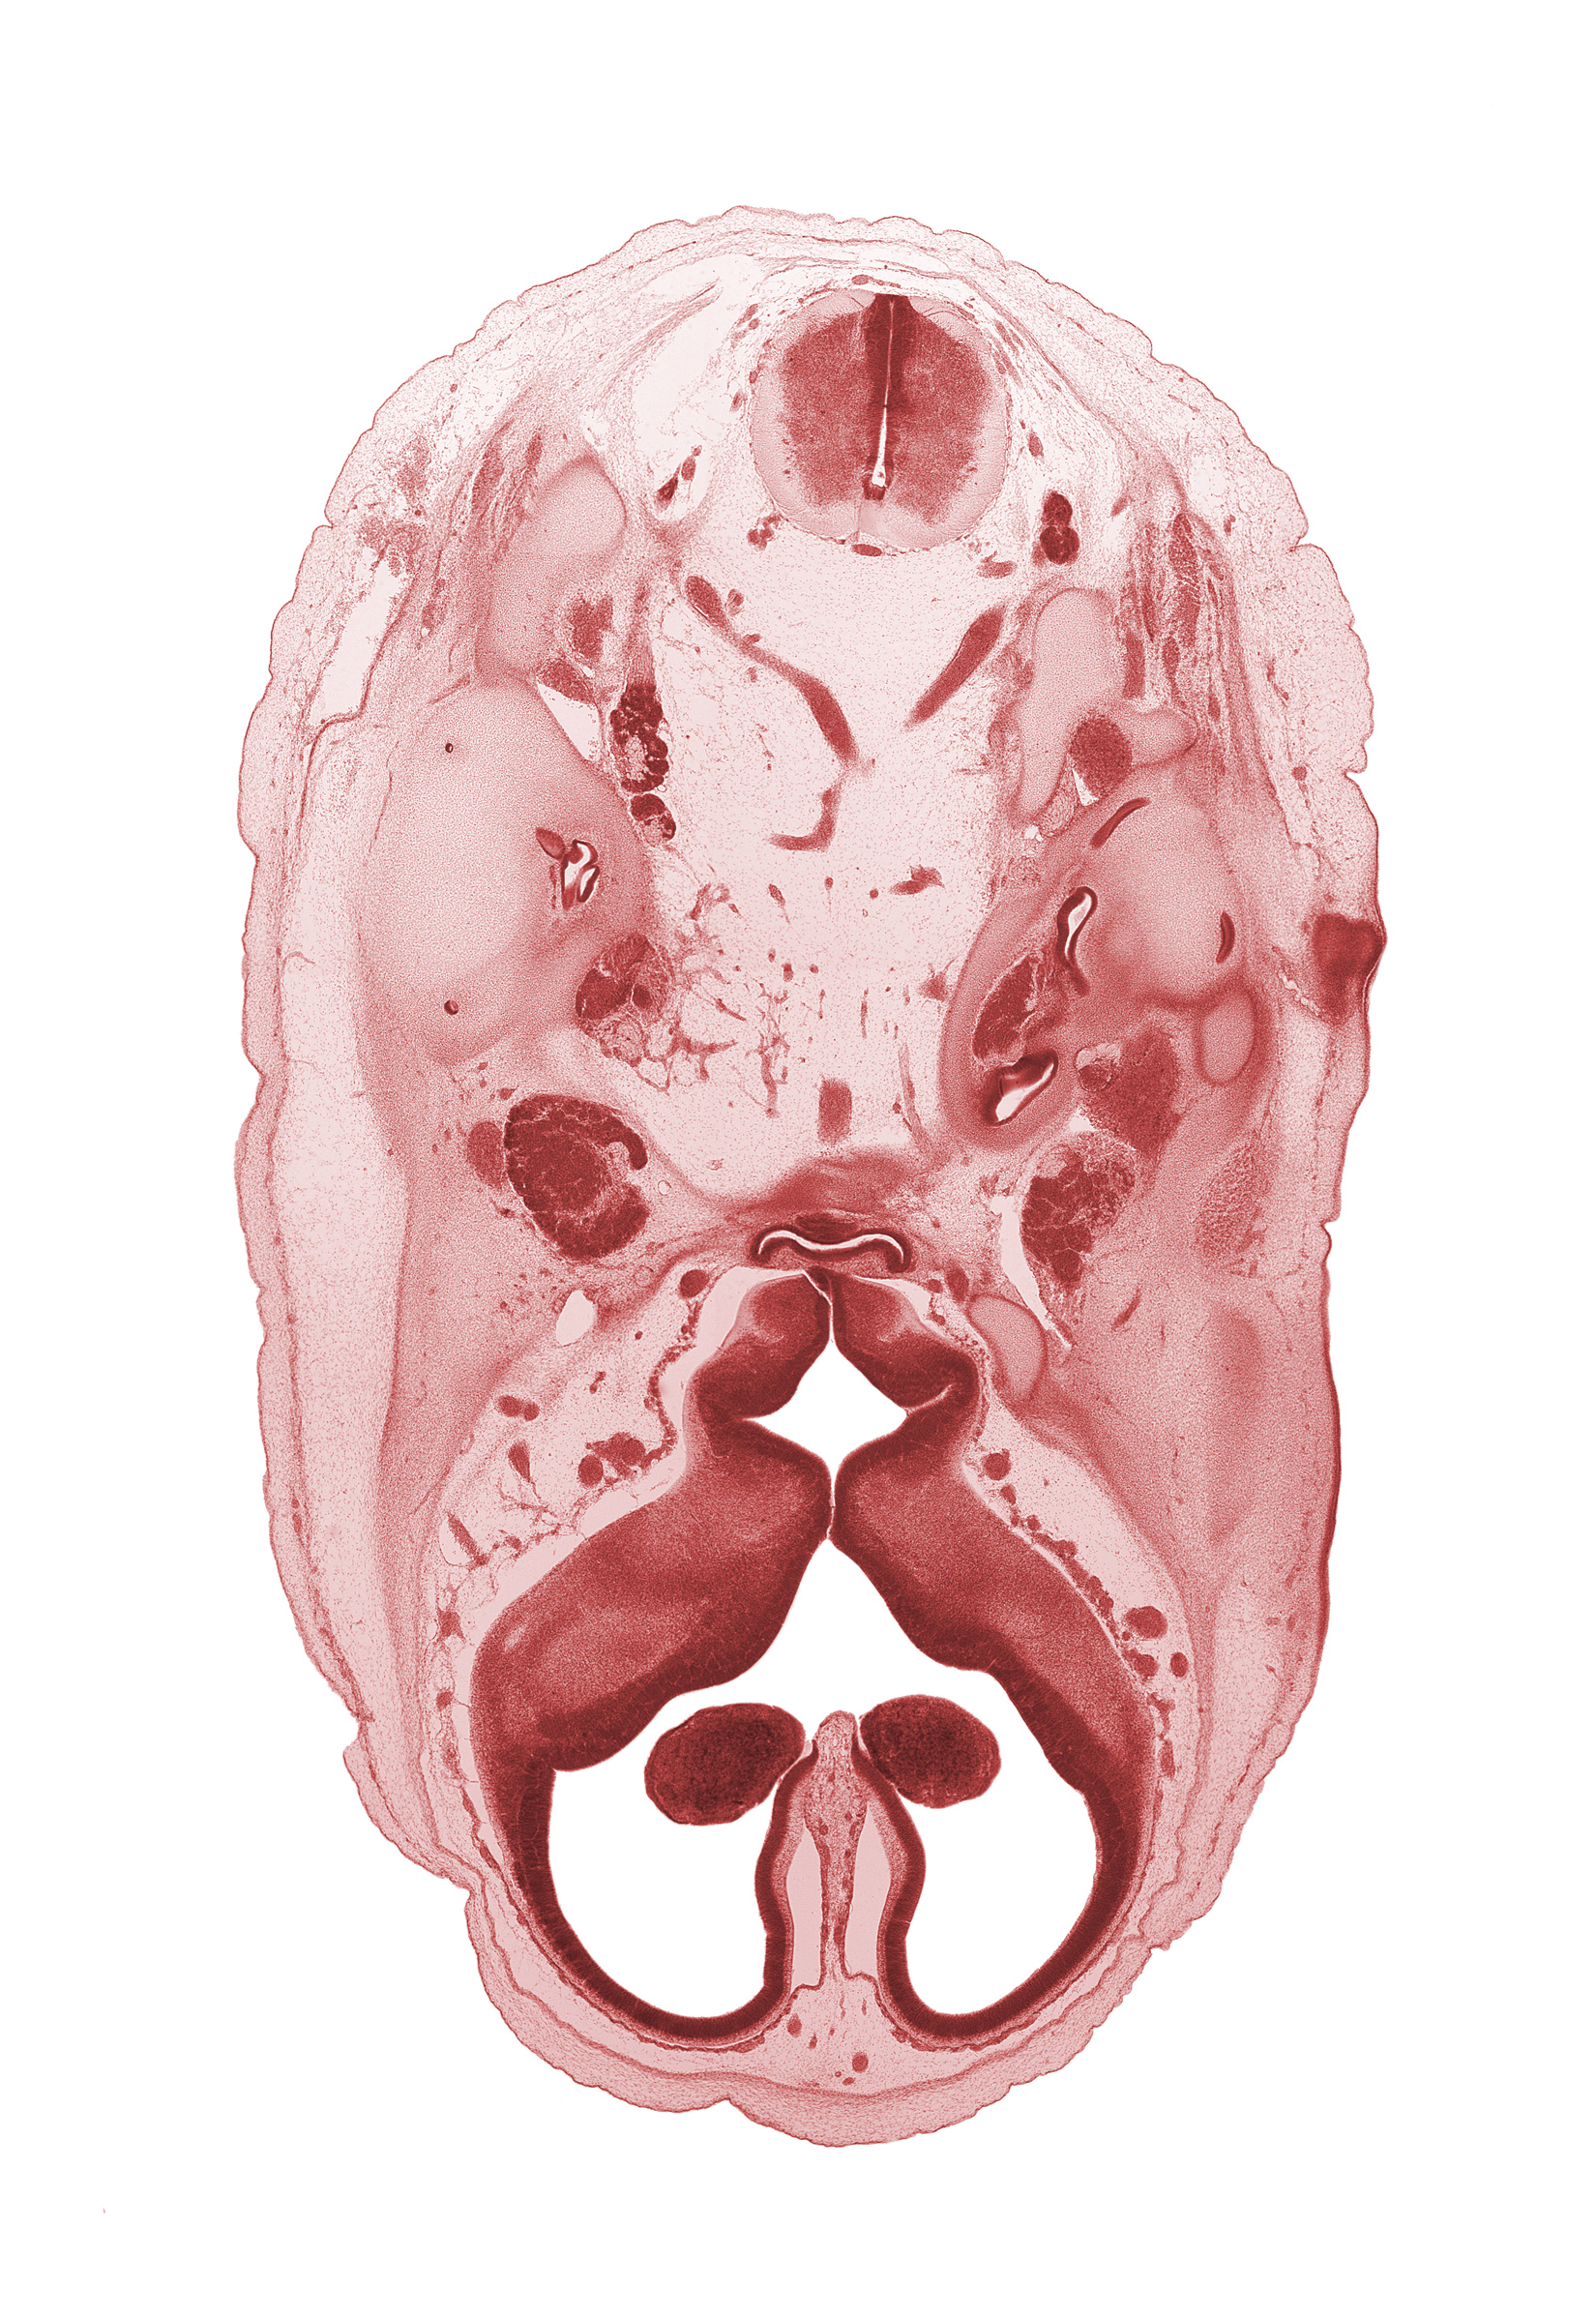 C-1 spinal ganglion, abducens nerve (CN VI), accessory nerve (CN XI), artifact separation(s), auricle, cochlear duct, dorsum sellae region, falx cerebri region, foramen magnum region, hypoglossal nerve (CN XII), hypothalamus, internal carotid artery, internal jugular vein, interventricular foramen, ophthalmic nerve (CN V₁), optic groove, orbitosphenoid, primary head vein, spinal accessory nerve (CN XI), spinal cord, subarachnoid space, third ventricle, trigeminal ganglion (CN V), vagus nerve (CN X), venous plexus(es), vertebral artery